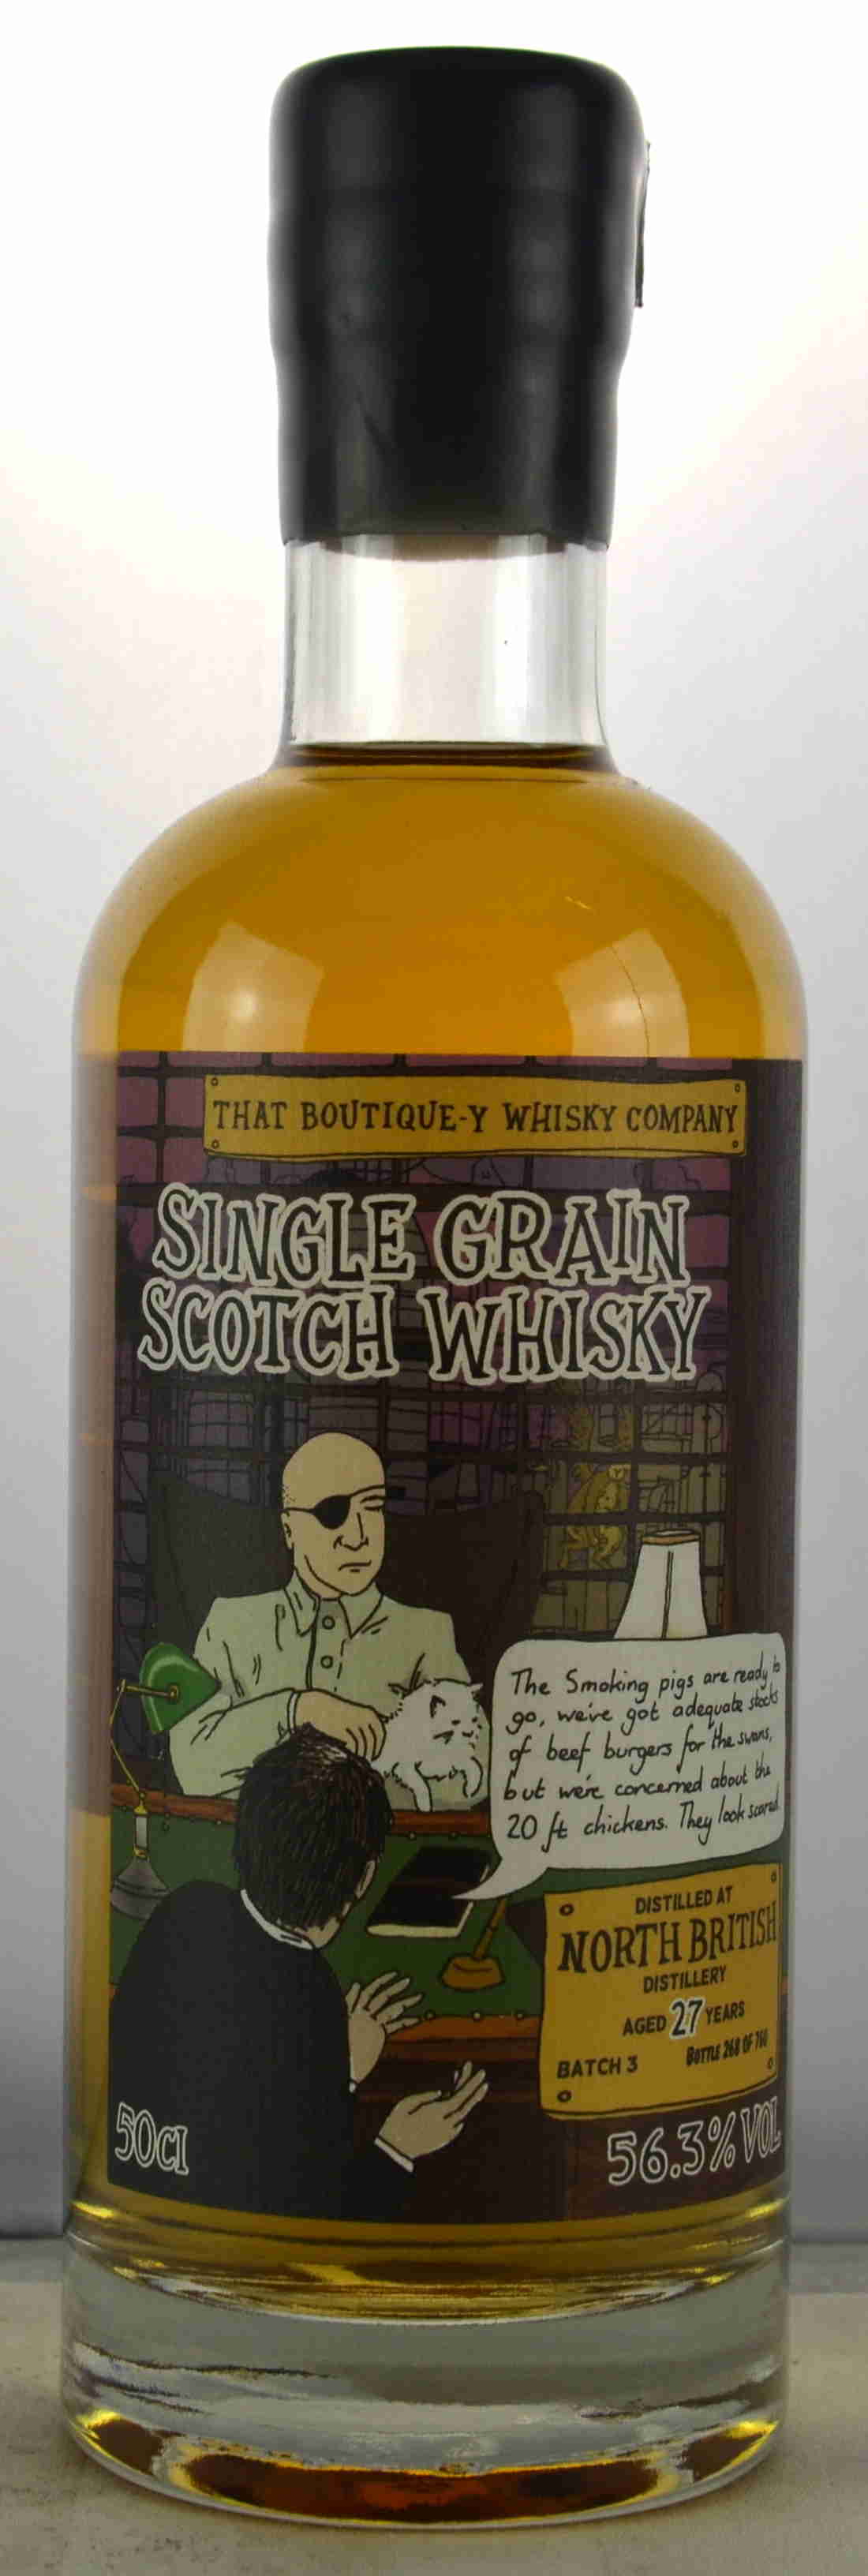 North British 27 Jahre Single Grain Whisky 56,3% 0,5L (That Boutique-y) Shop